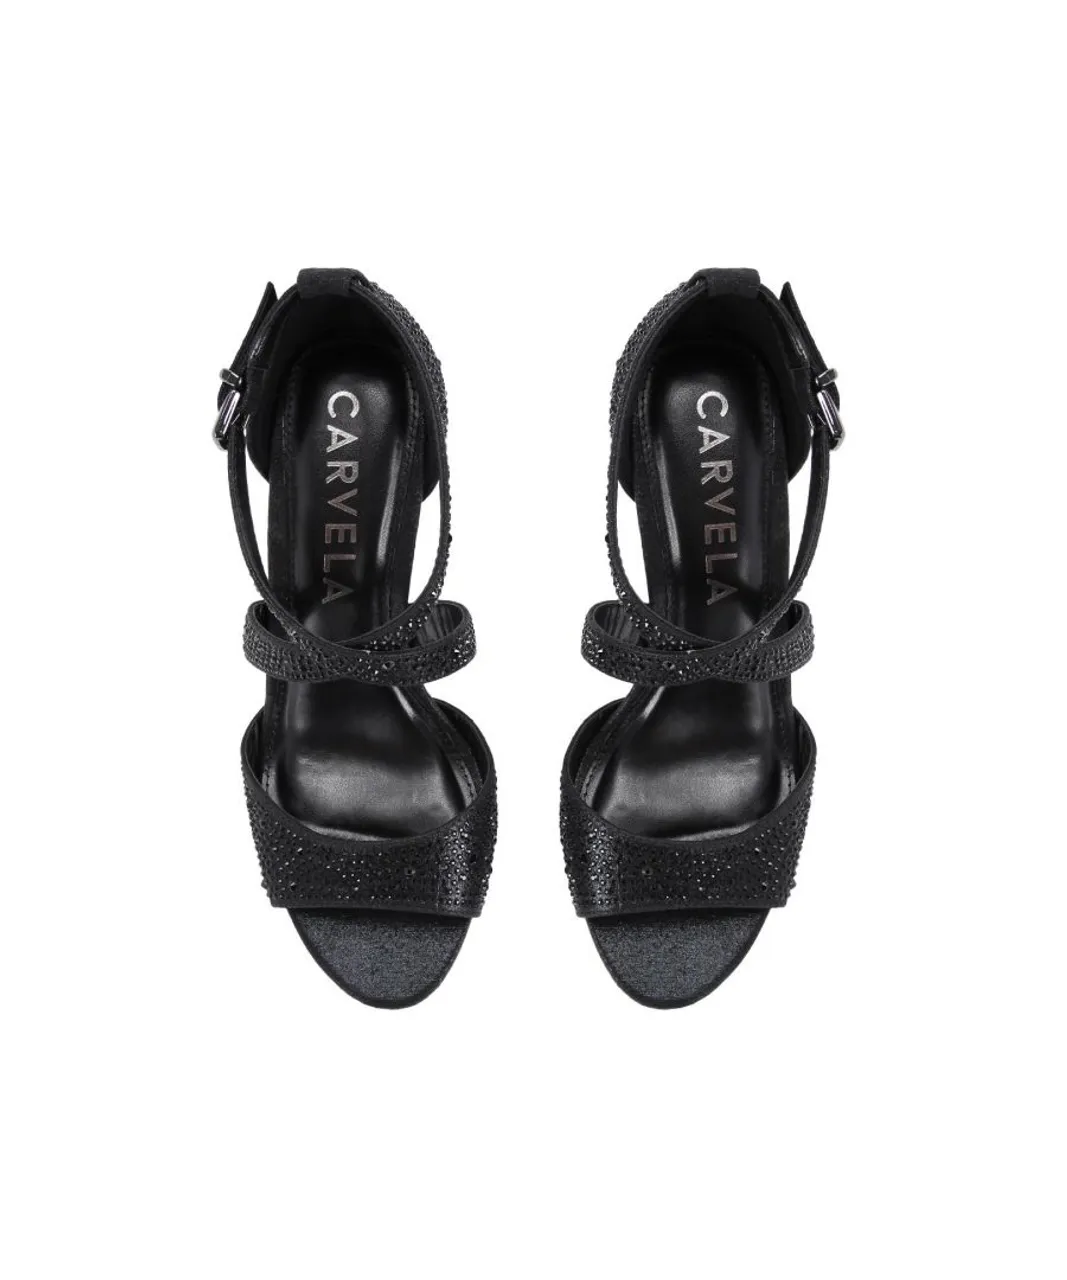 Carvela Womens Kross Sandal Jewel Sandals - Black Fabric